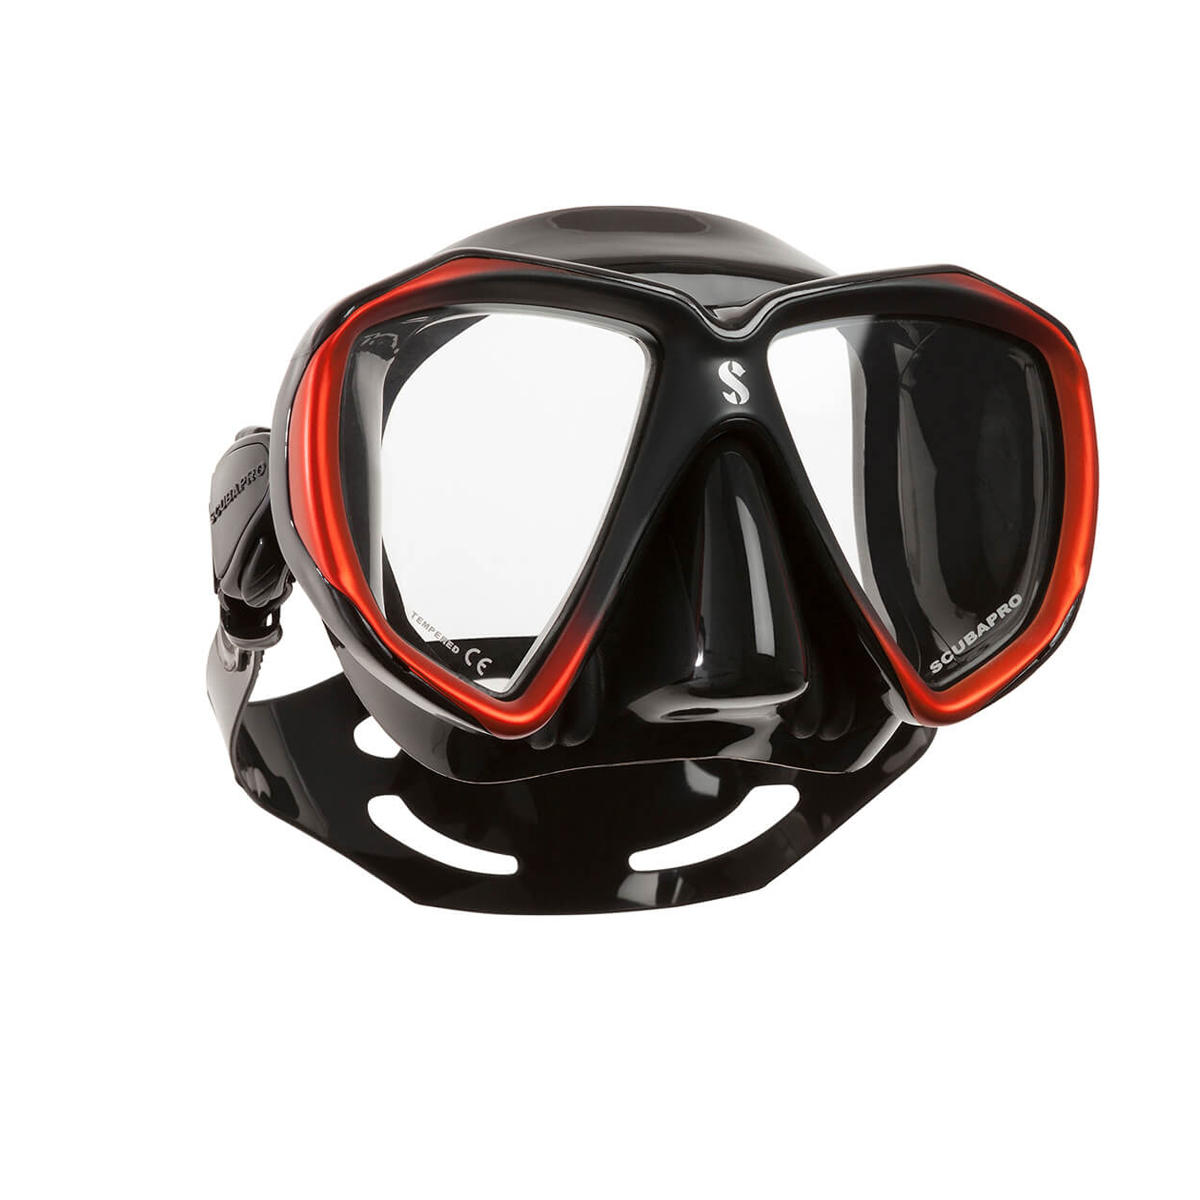 Scubapro Spectra Mask – Aquarius Scuba